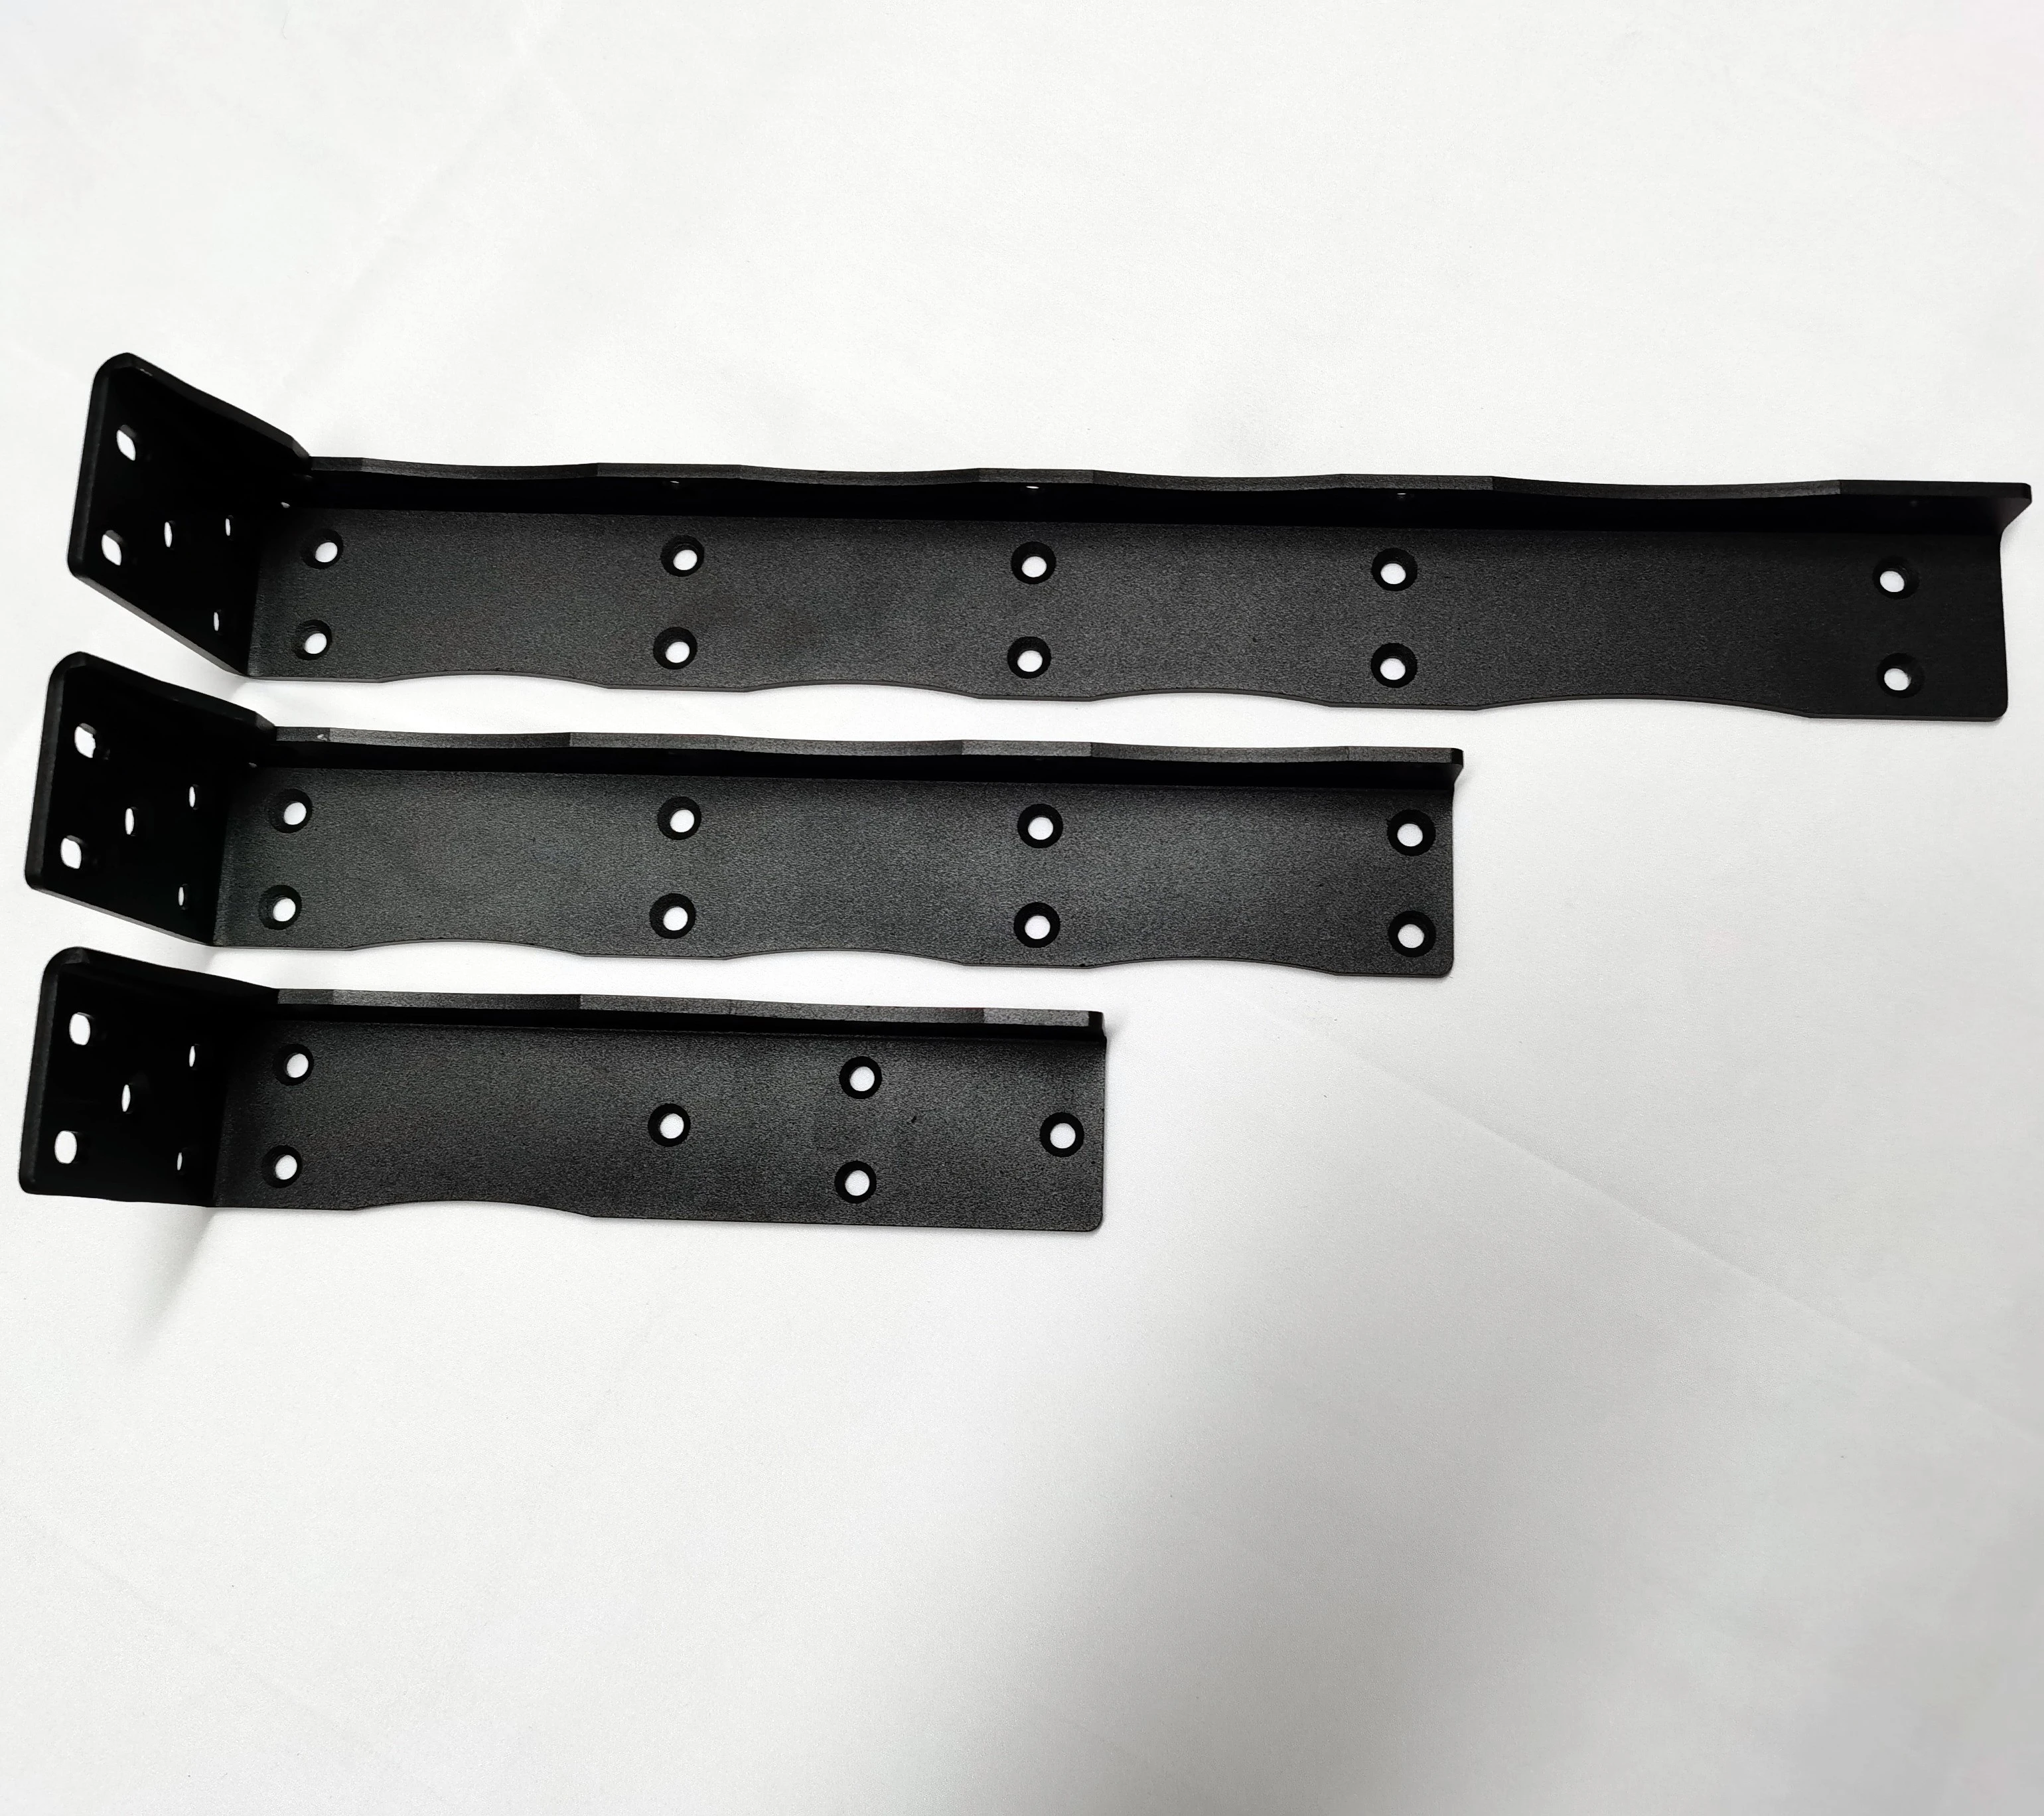 Black Steel Shelf Bracket for Wood Shelving - Buy black steel shelf bracket, schwarze Metallbügel, Wandhalterungen aus schwarzem Metall Product on Surealong